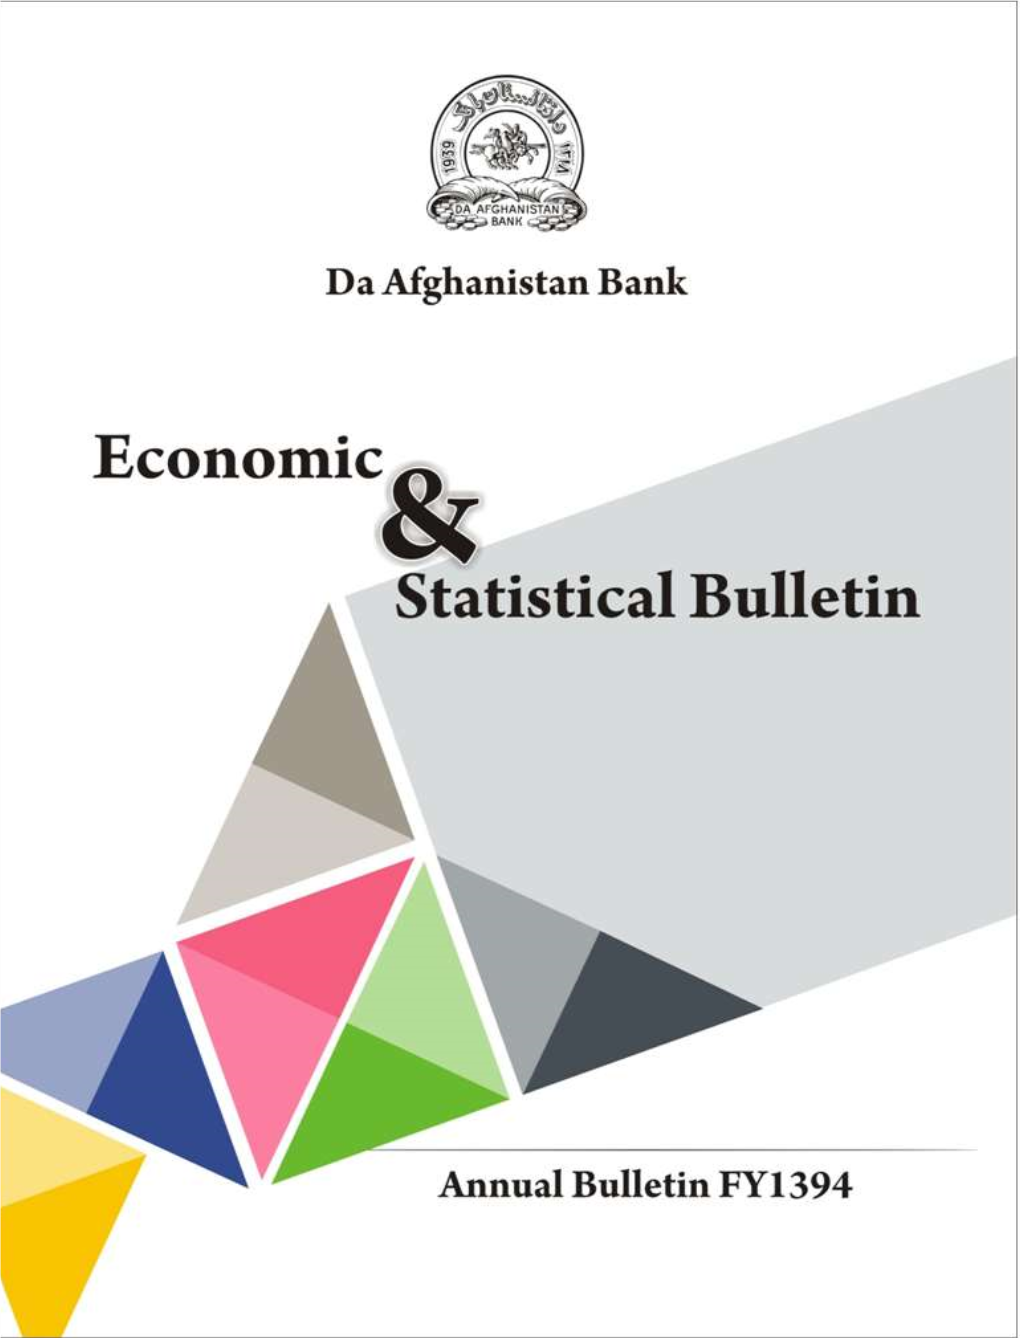 Da Afghanistan Bank Annual Economic and Statistical Bulletin 2015